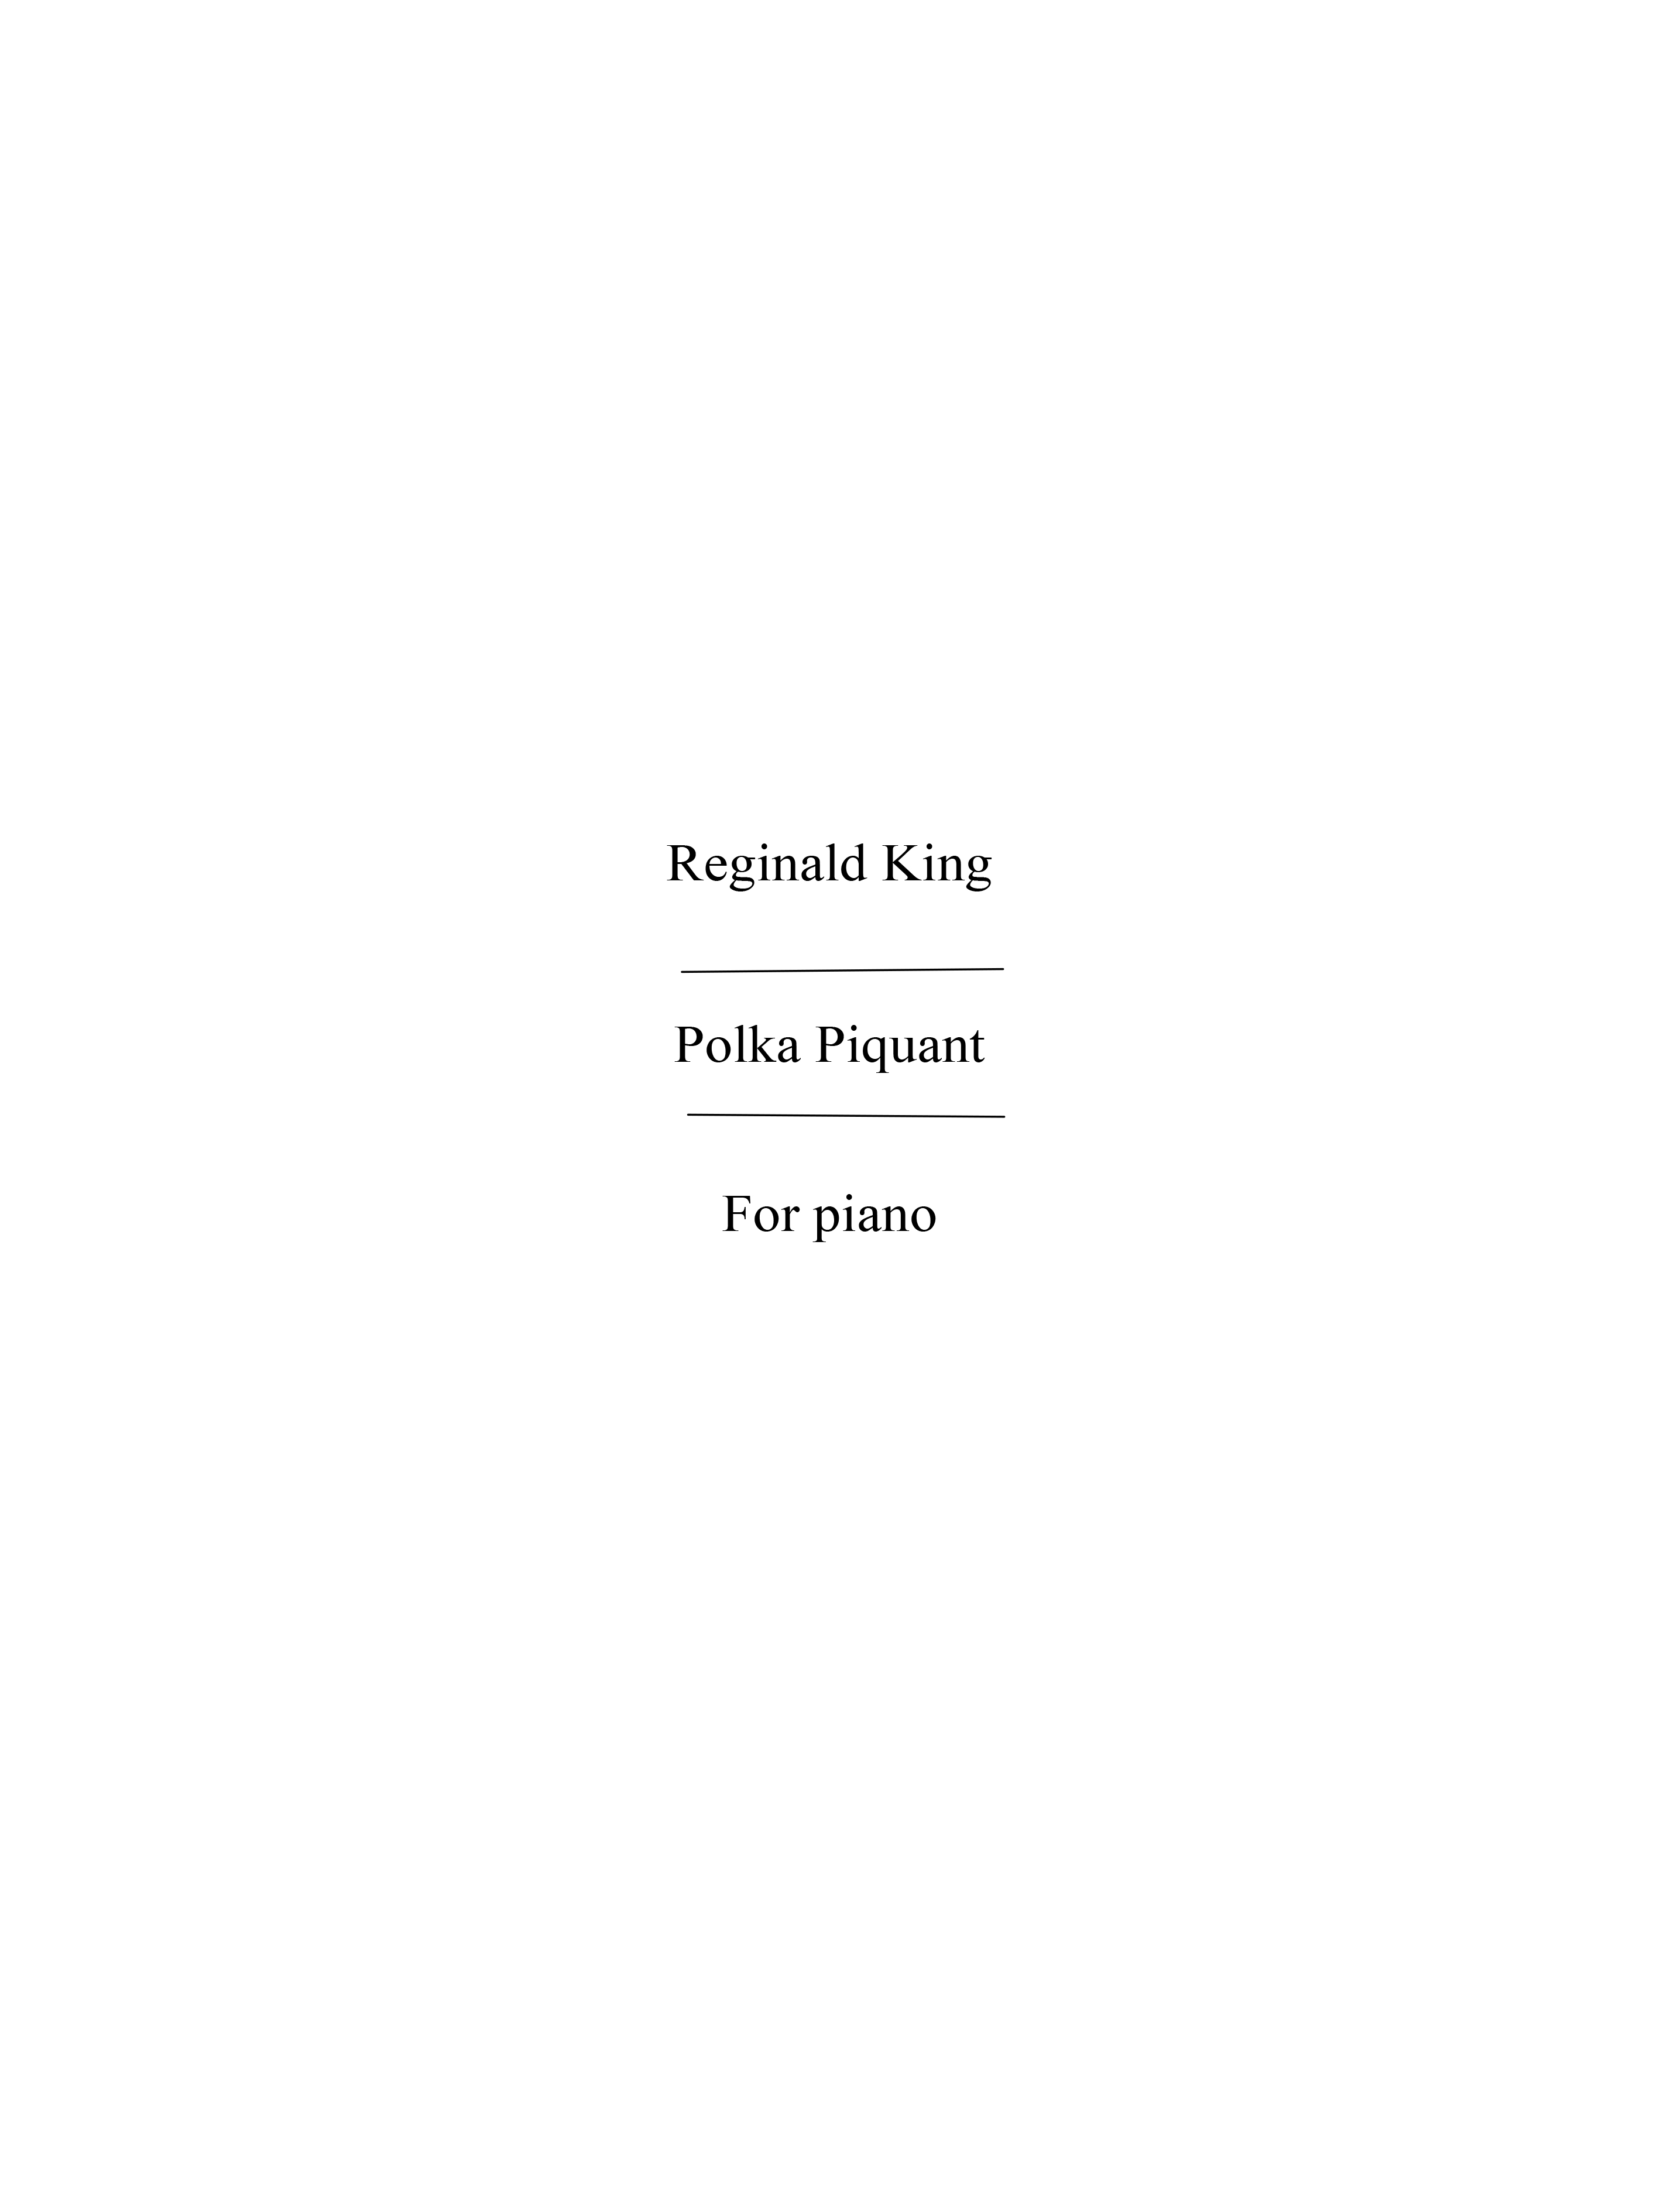 King, R: Polka Piquant: Pf